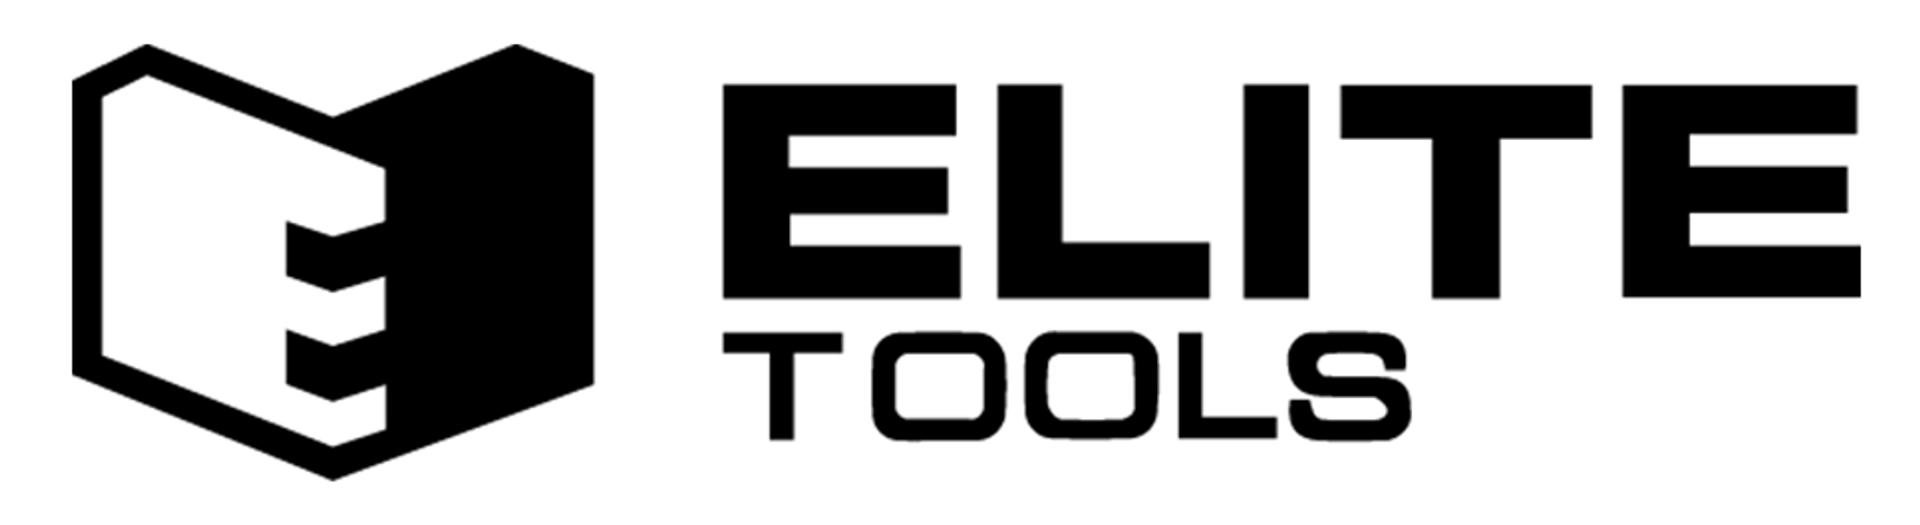 ELITE TOOLS logo de circulaires